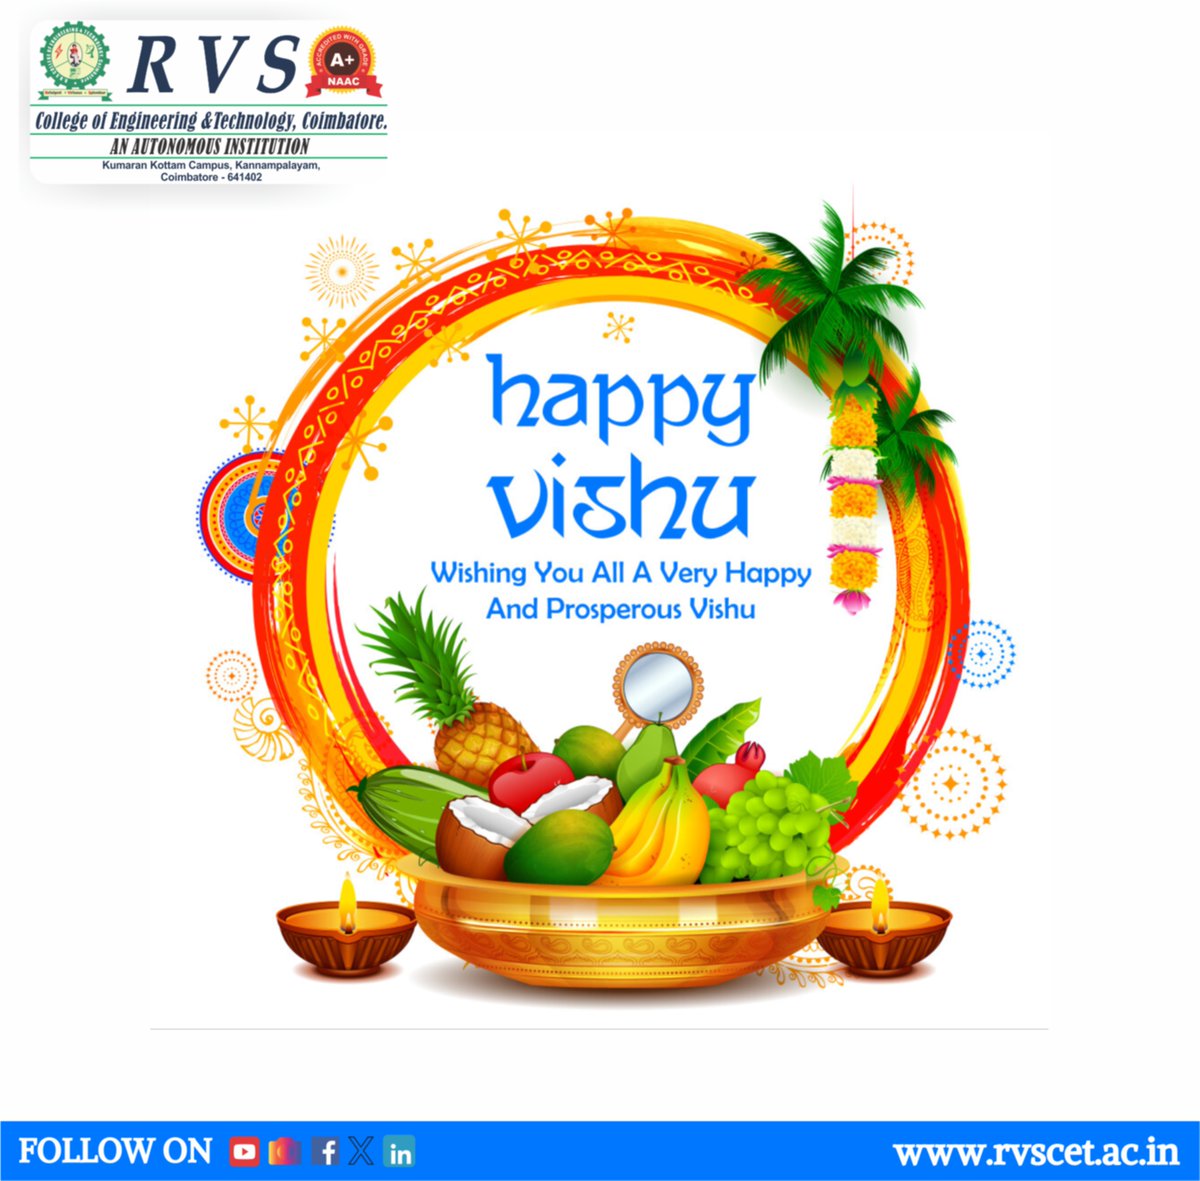 Happy Vishu all

#Happy_vishu #vishu  #Malayali  #Krishnar #festival #staysafe #celebration #stayhealthy #april #tamil #festivals #indianfestival #ramzan #vishu #gudipadwa #tamilculture #RVS #RVSCET #Coimbatore #coimbatore_College #Best_College #Students